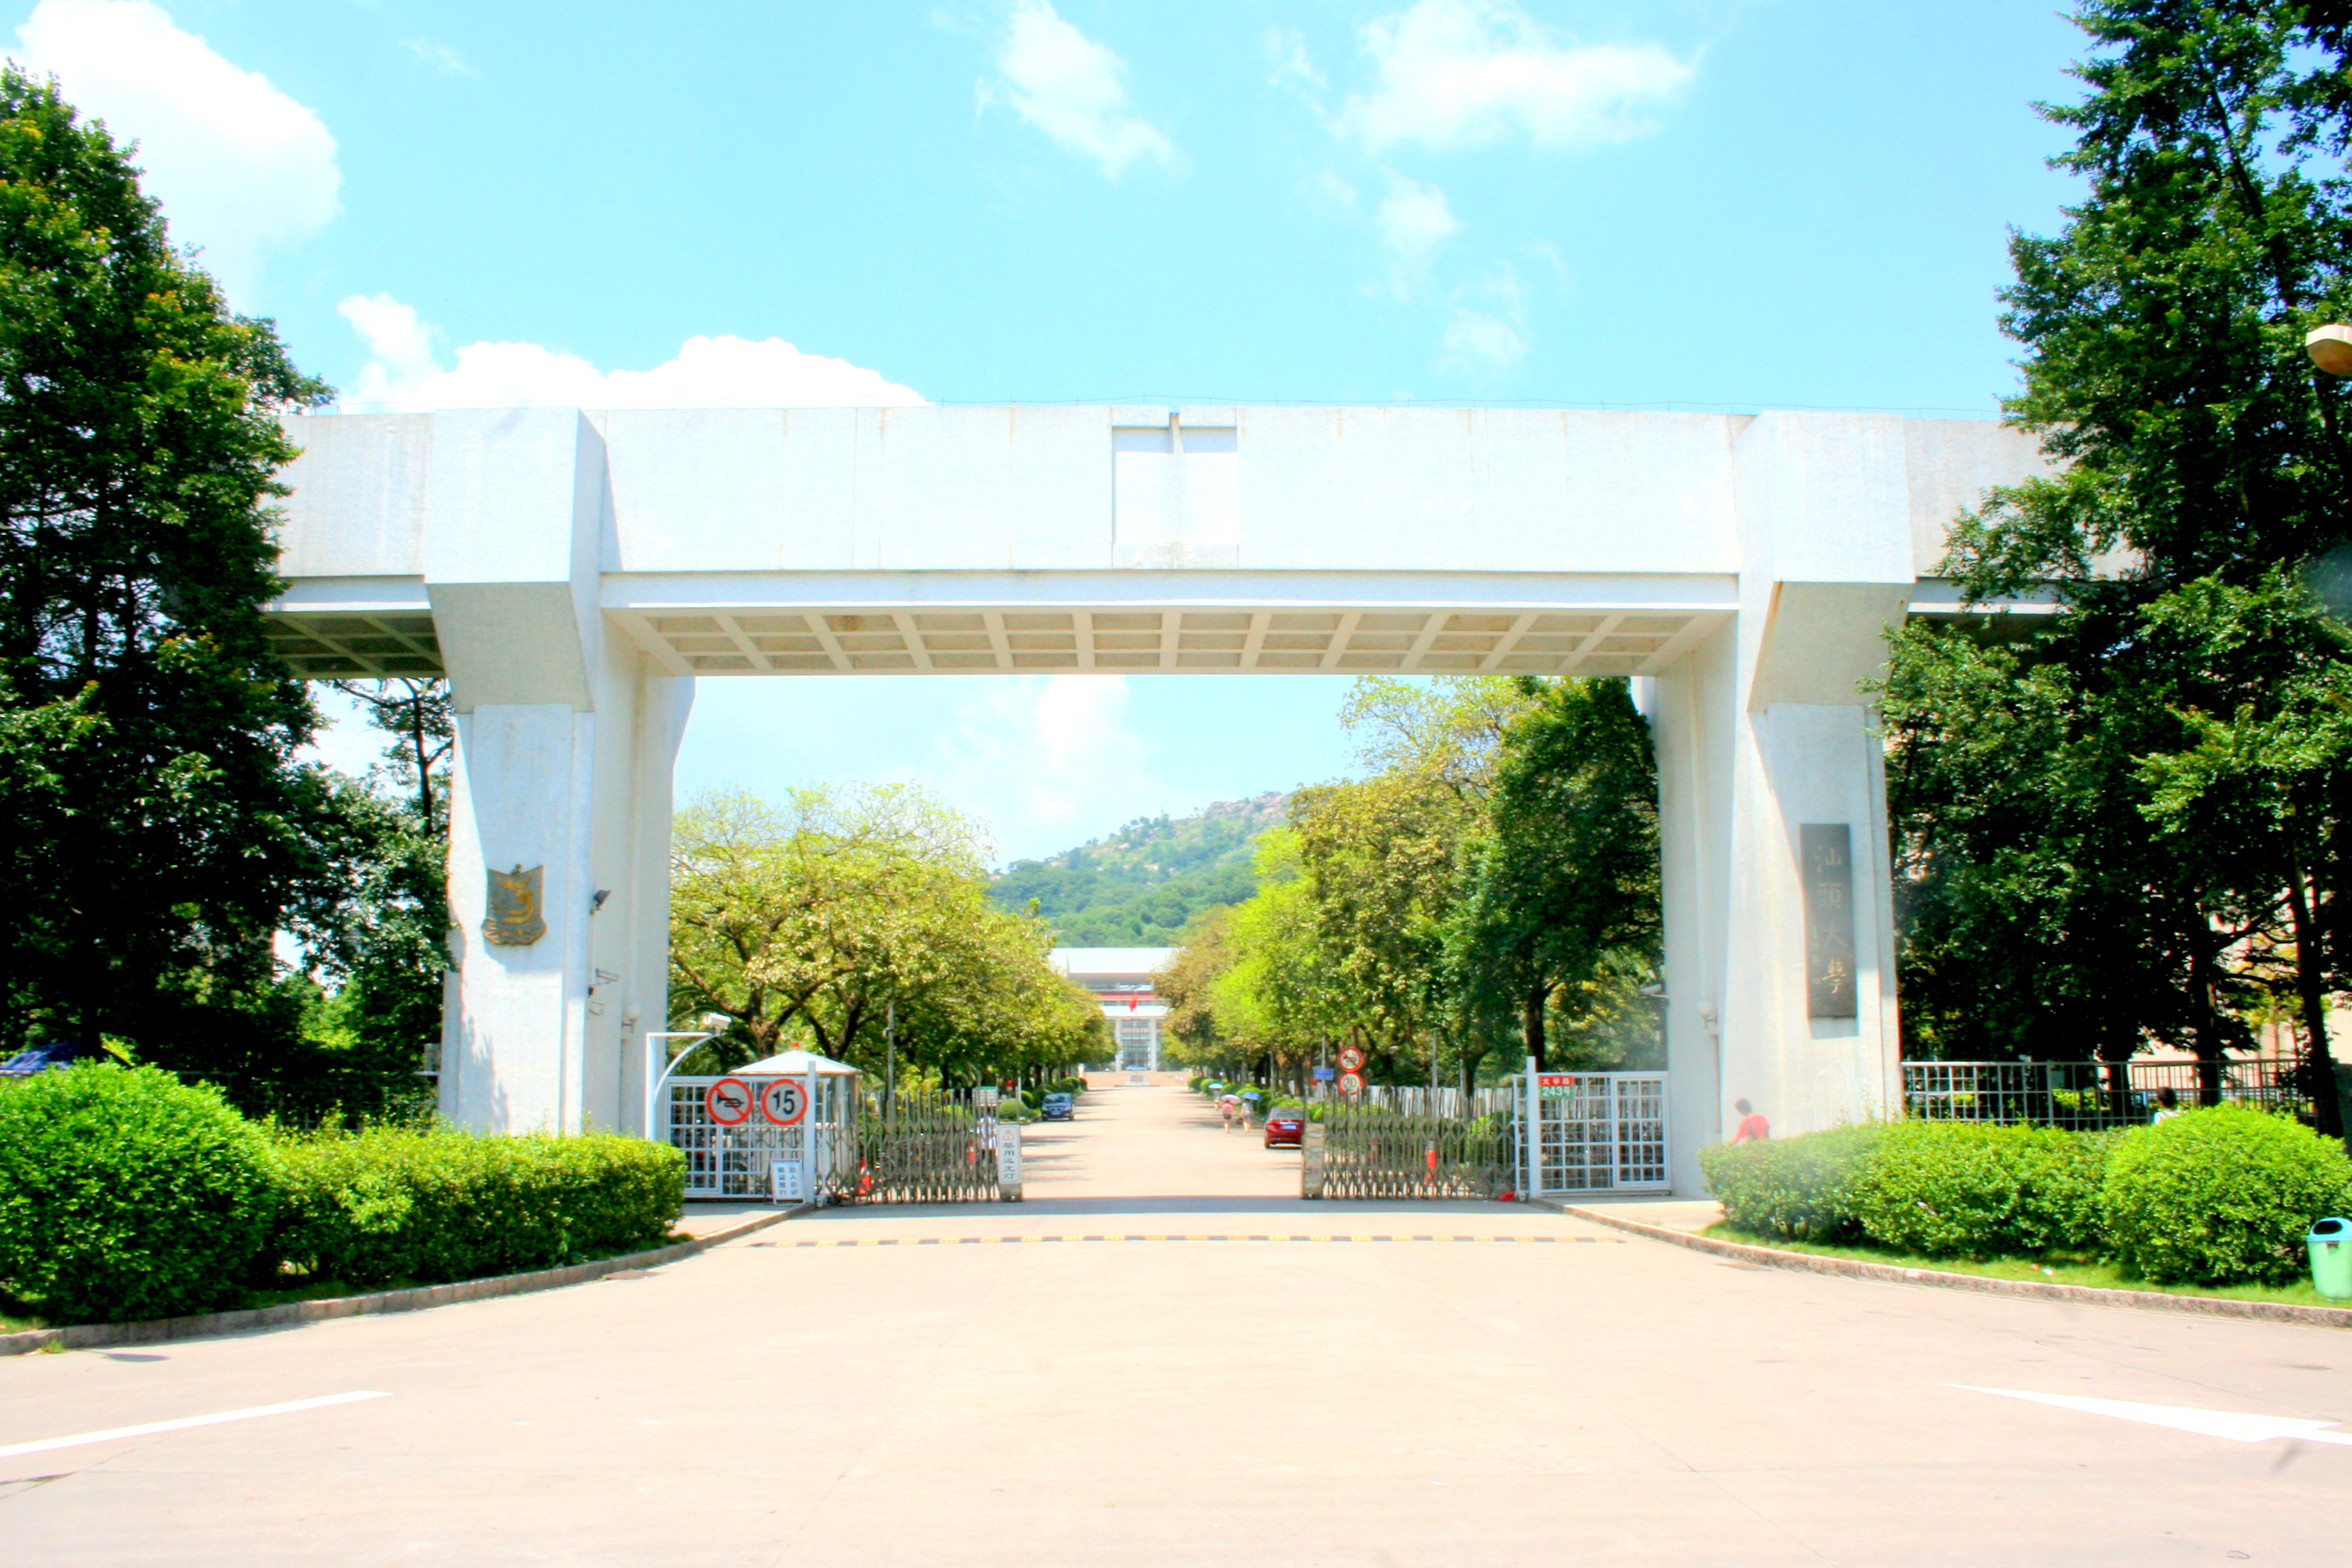 File:Shantou University Entrance Gate.jpg - Wikimedia Commons